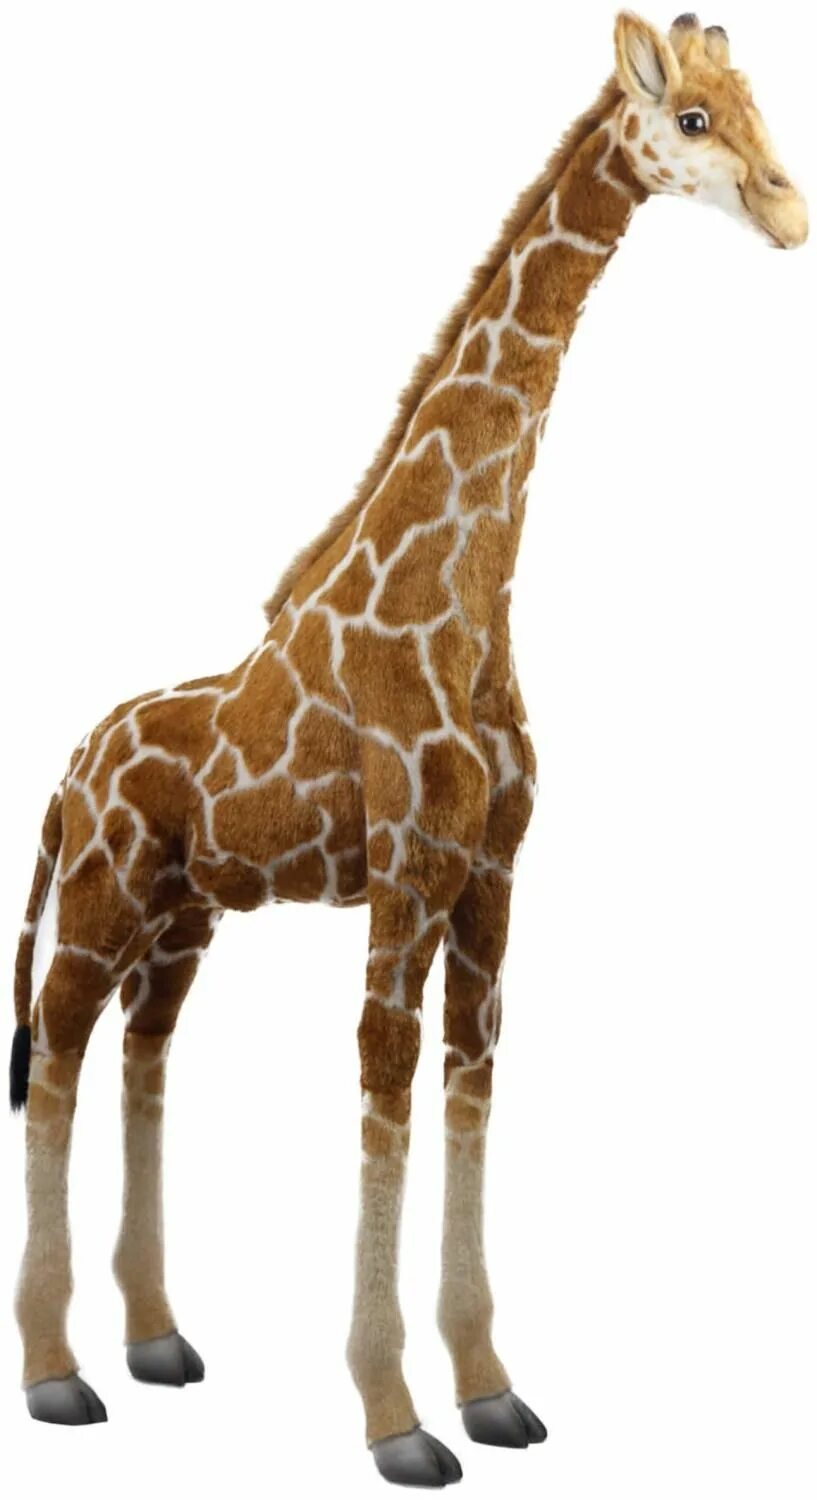 Купить жирафа игрушку. Жираф 6977 Hansa. Hansa игрушки Жираф. Мягкая игрушка Жираф Hansa. Hansa Жираф, 130 см.